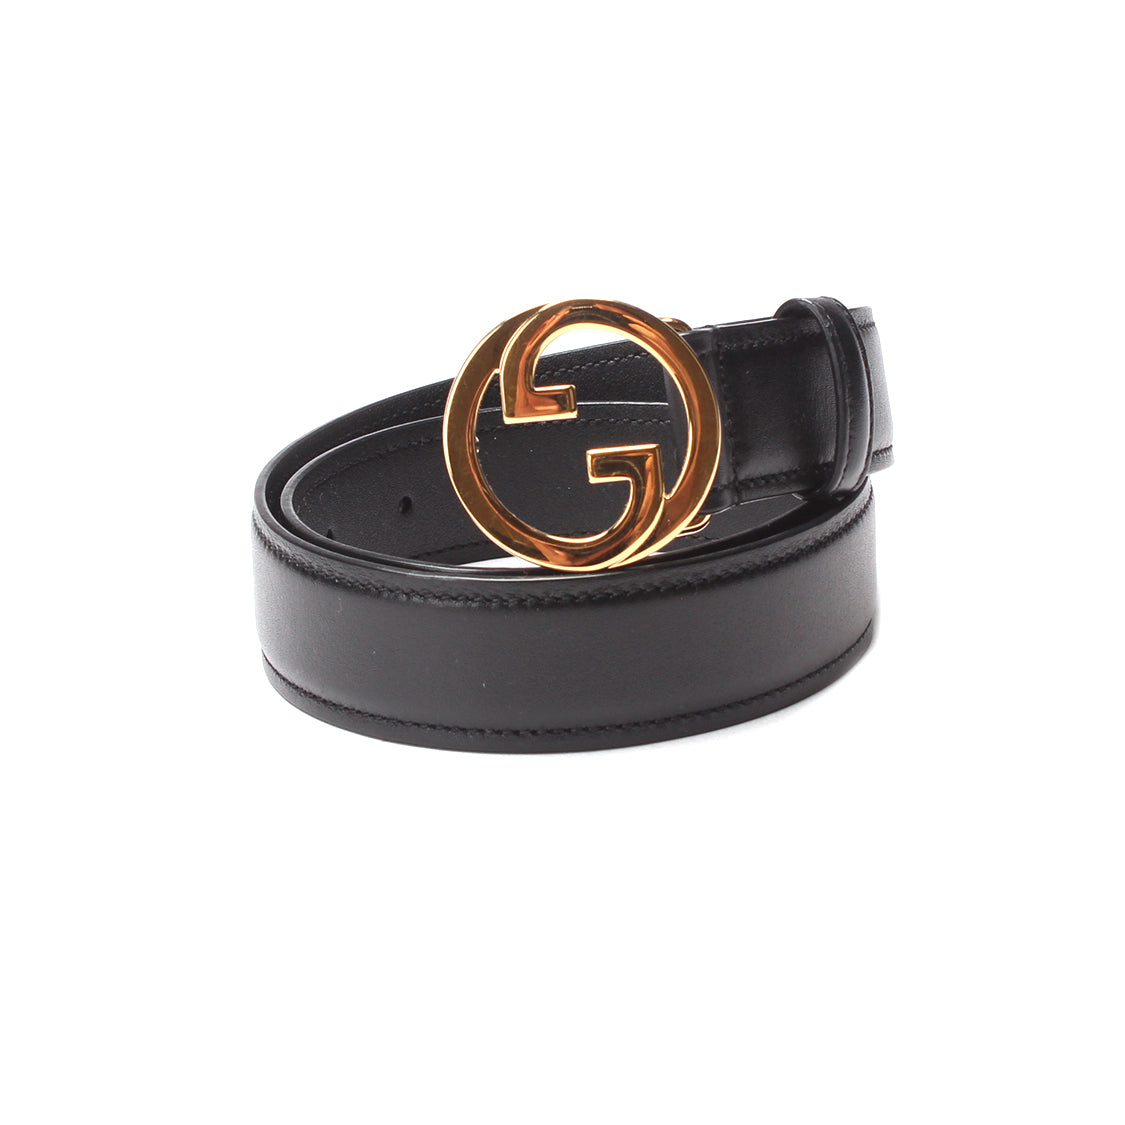 Gucci Interlocking G Leather Belt Leather Belt in Excellent condition